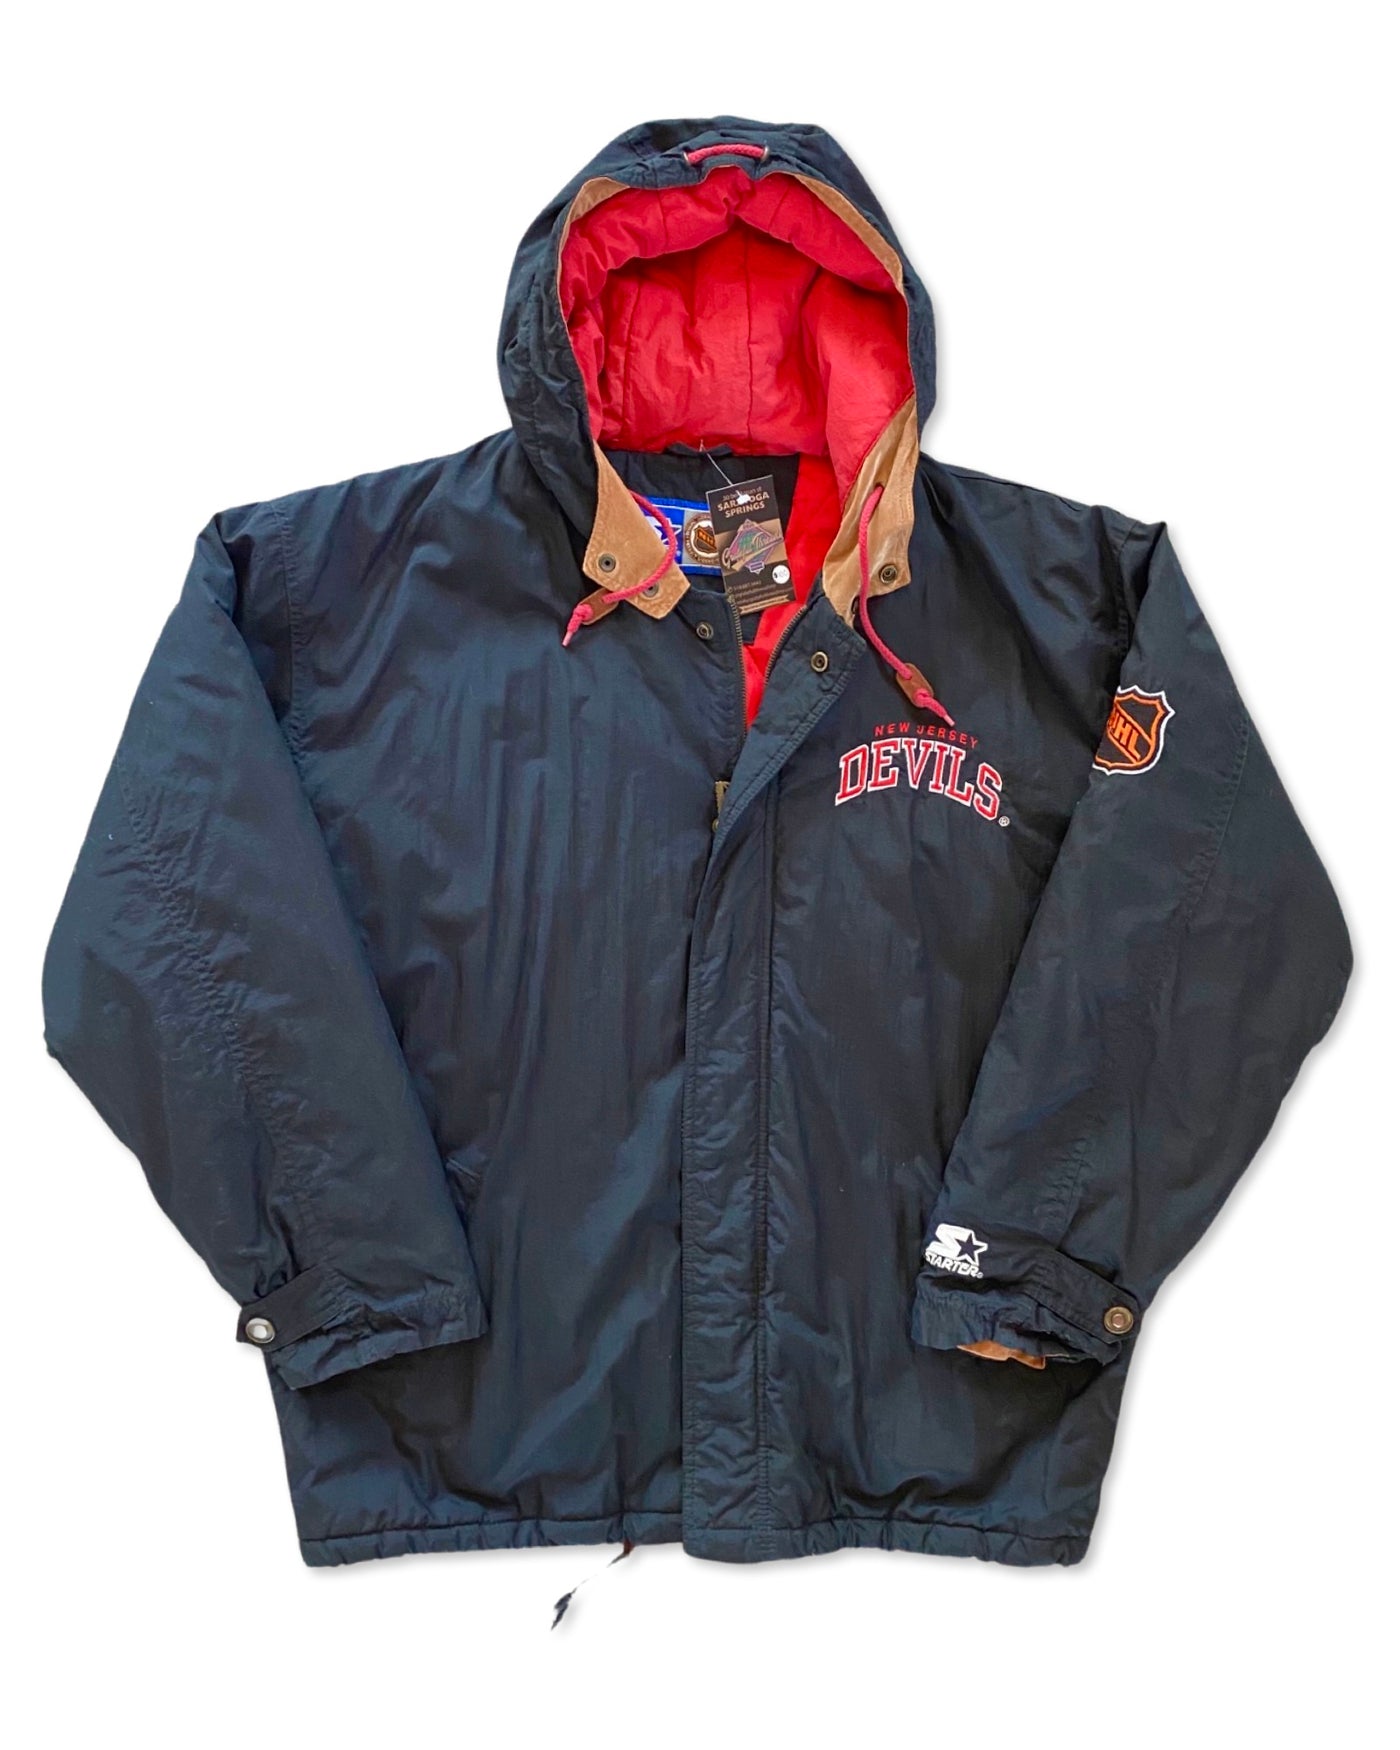 Vintage 90s New Jersey Devil’s Starter Jacket